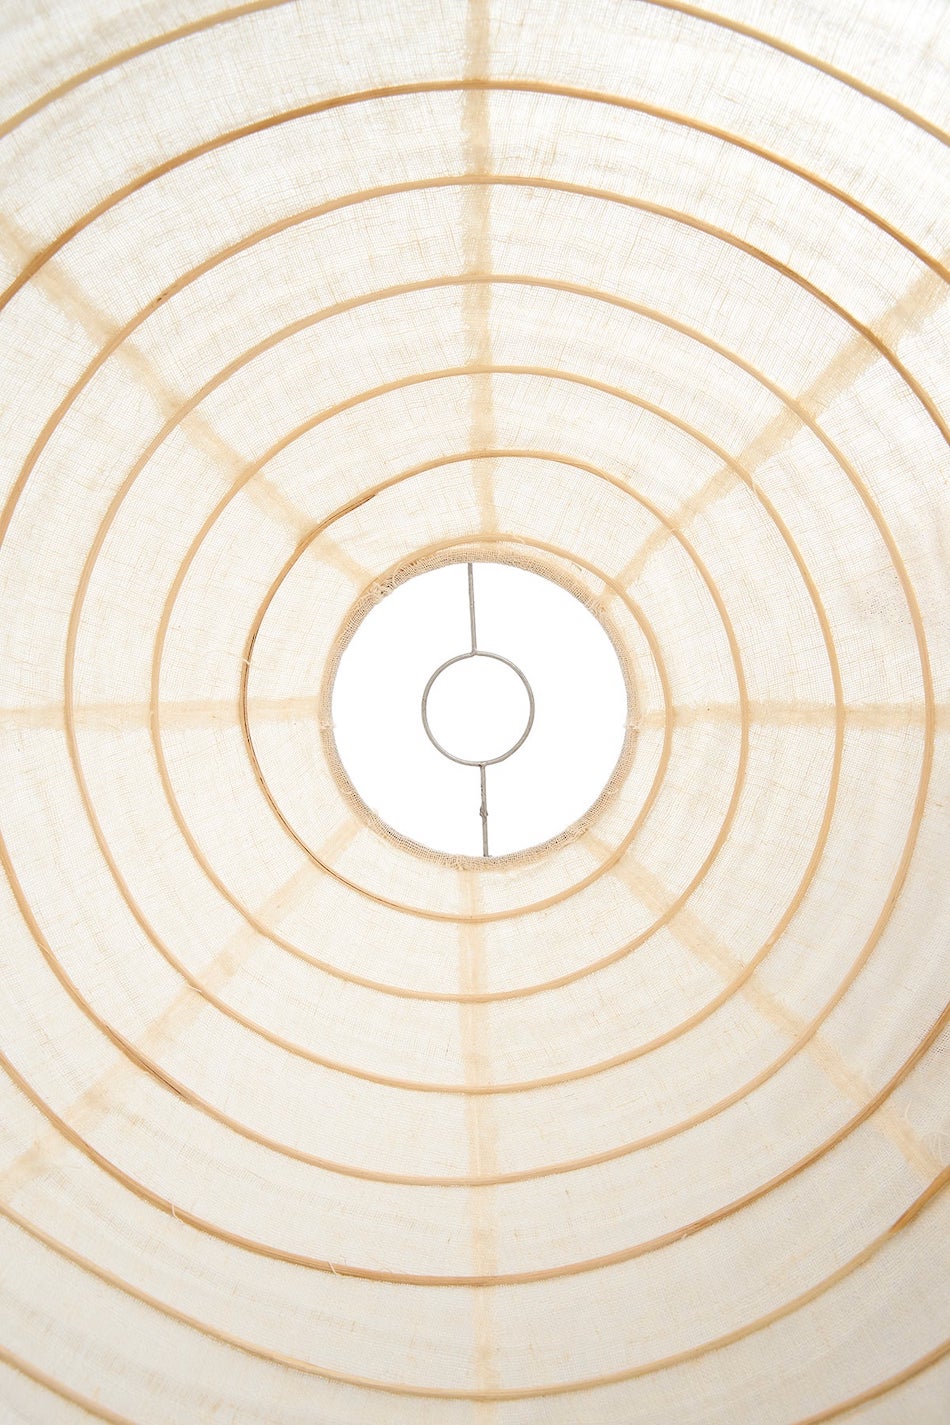 Linen Oval Pendant Light | Ivory